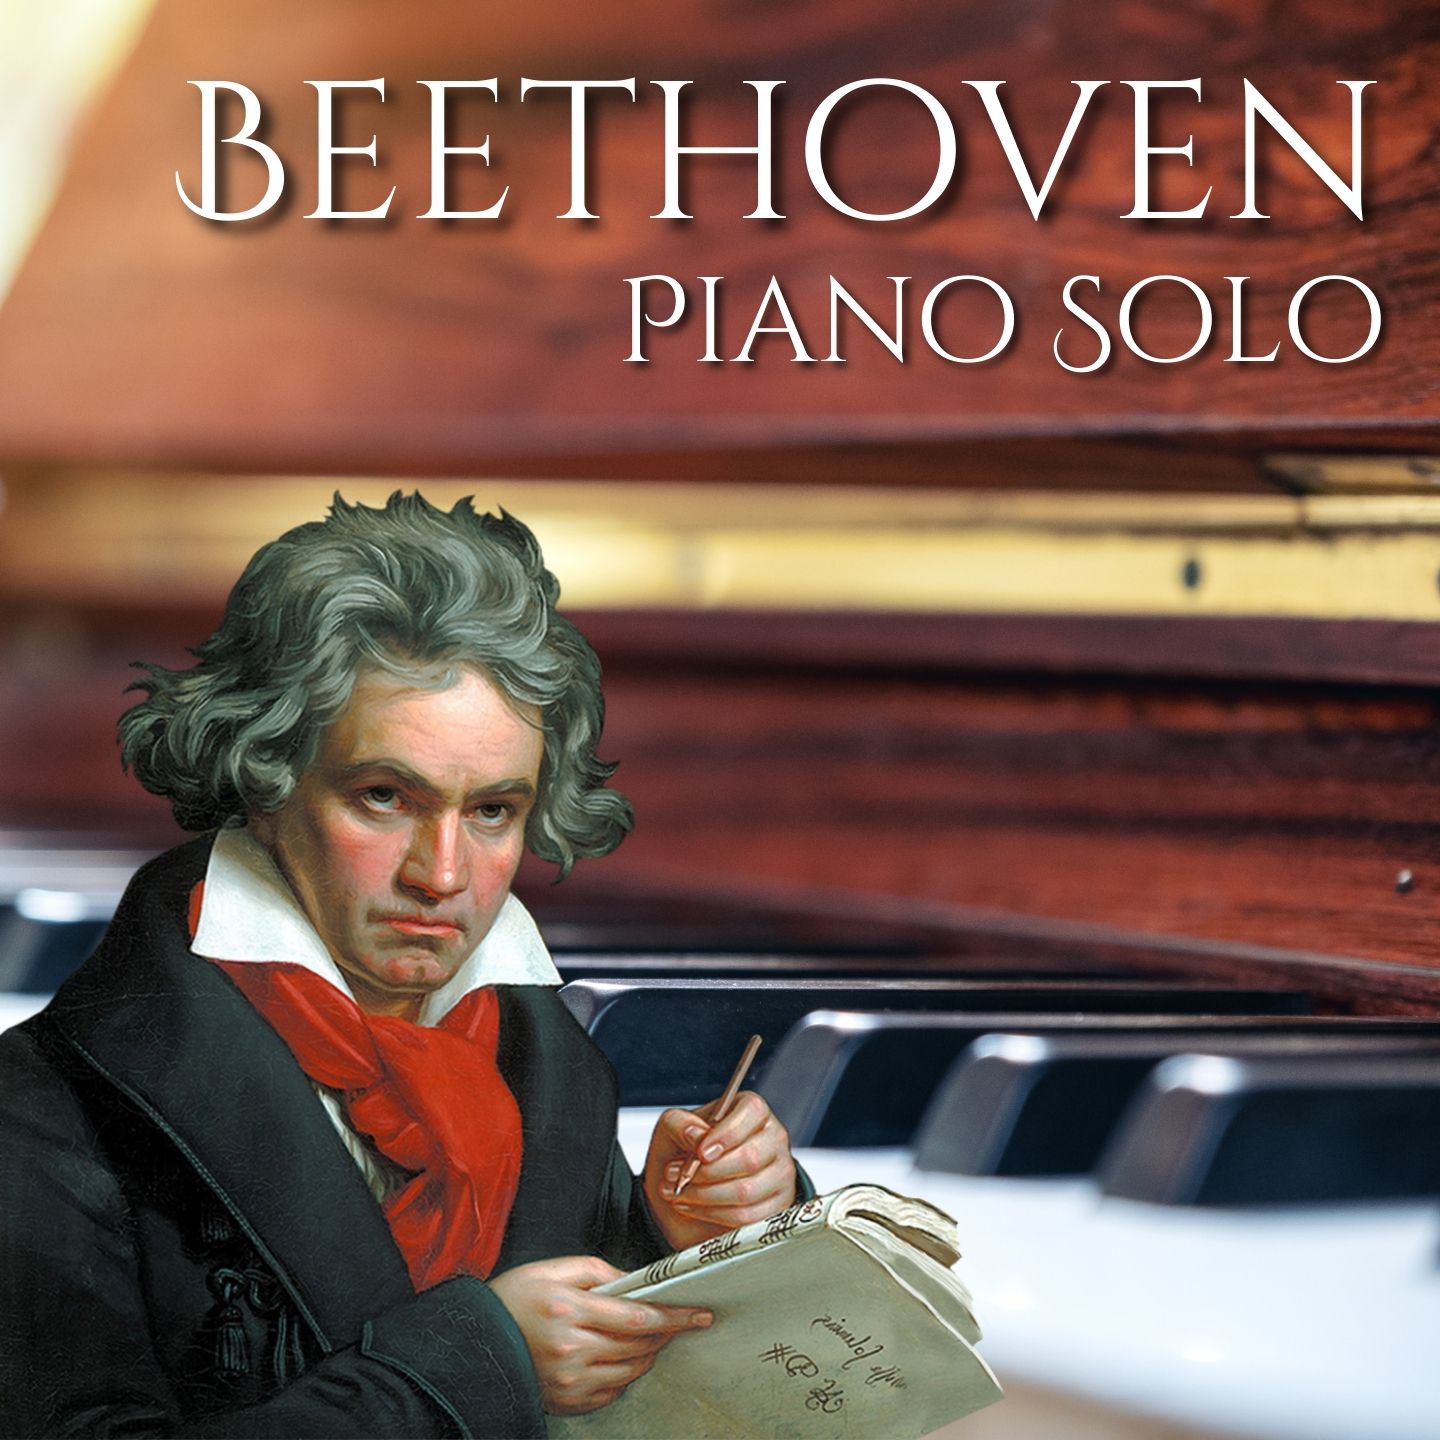 Beethoven Piano Solo